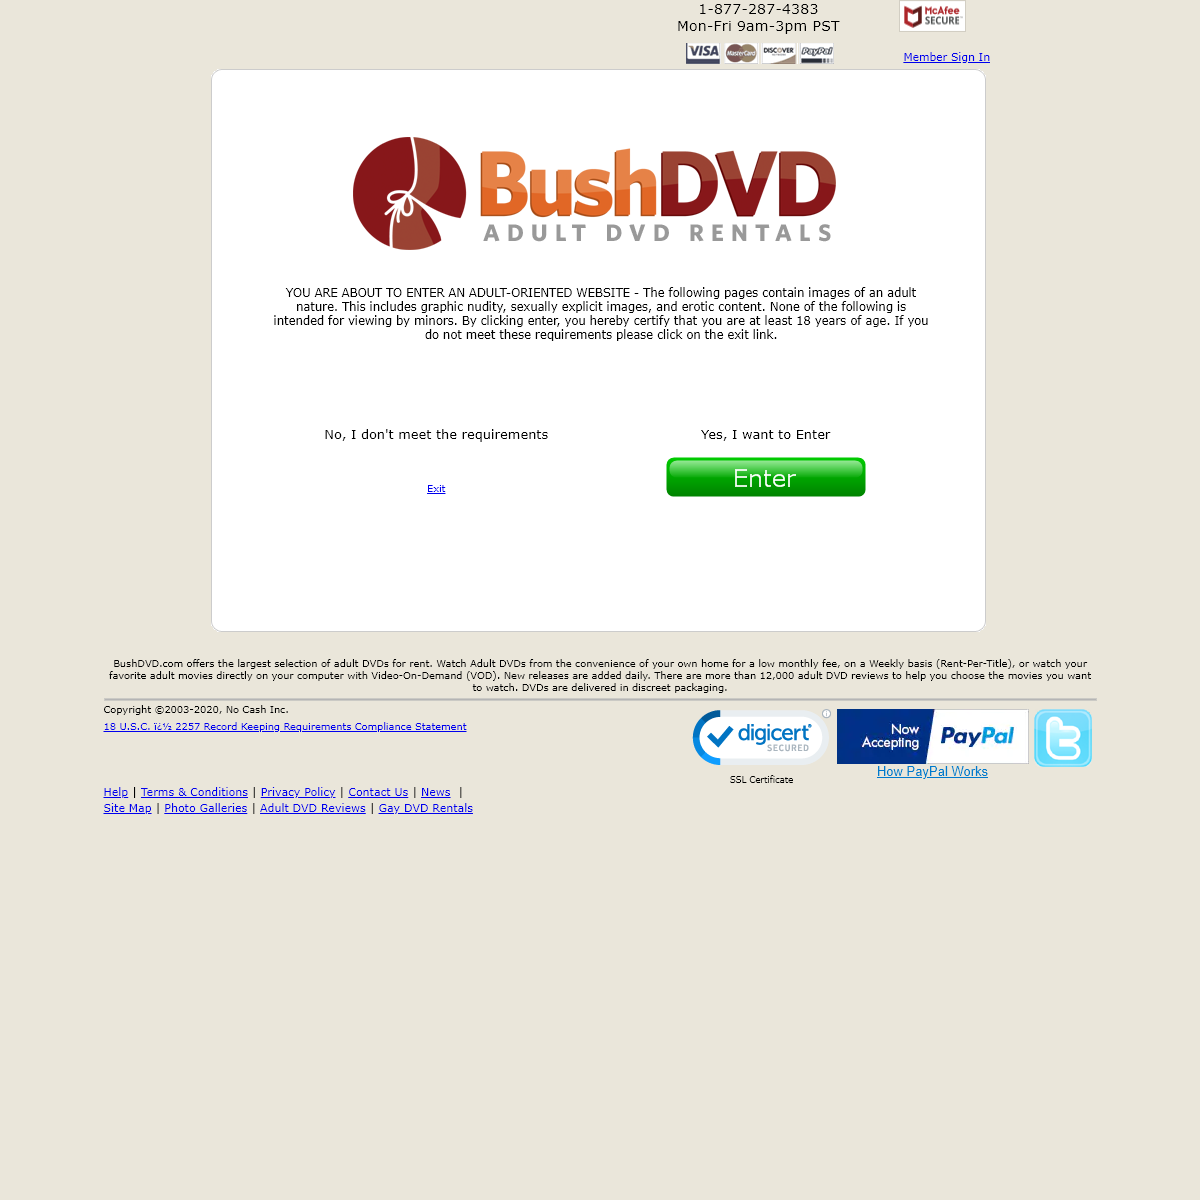 A complete backup of www.bushdvd.com